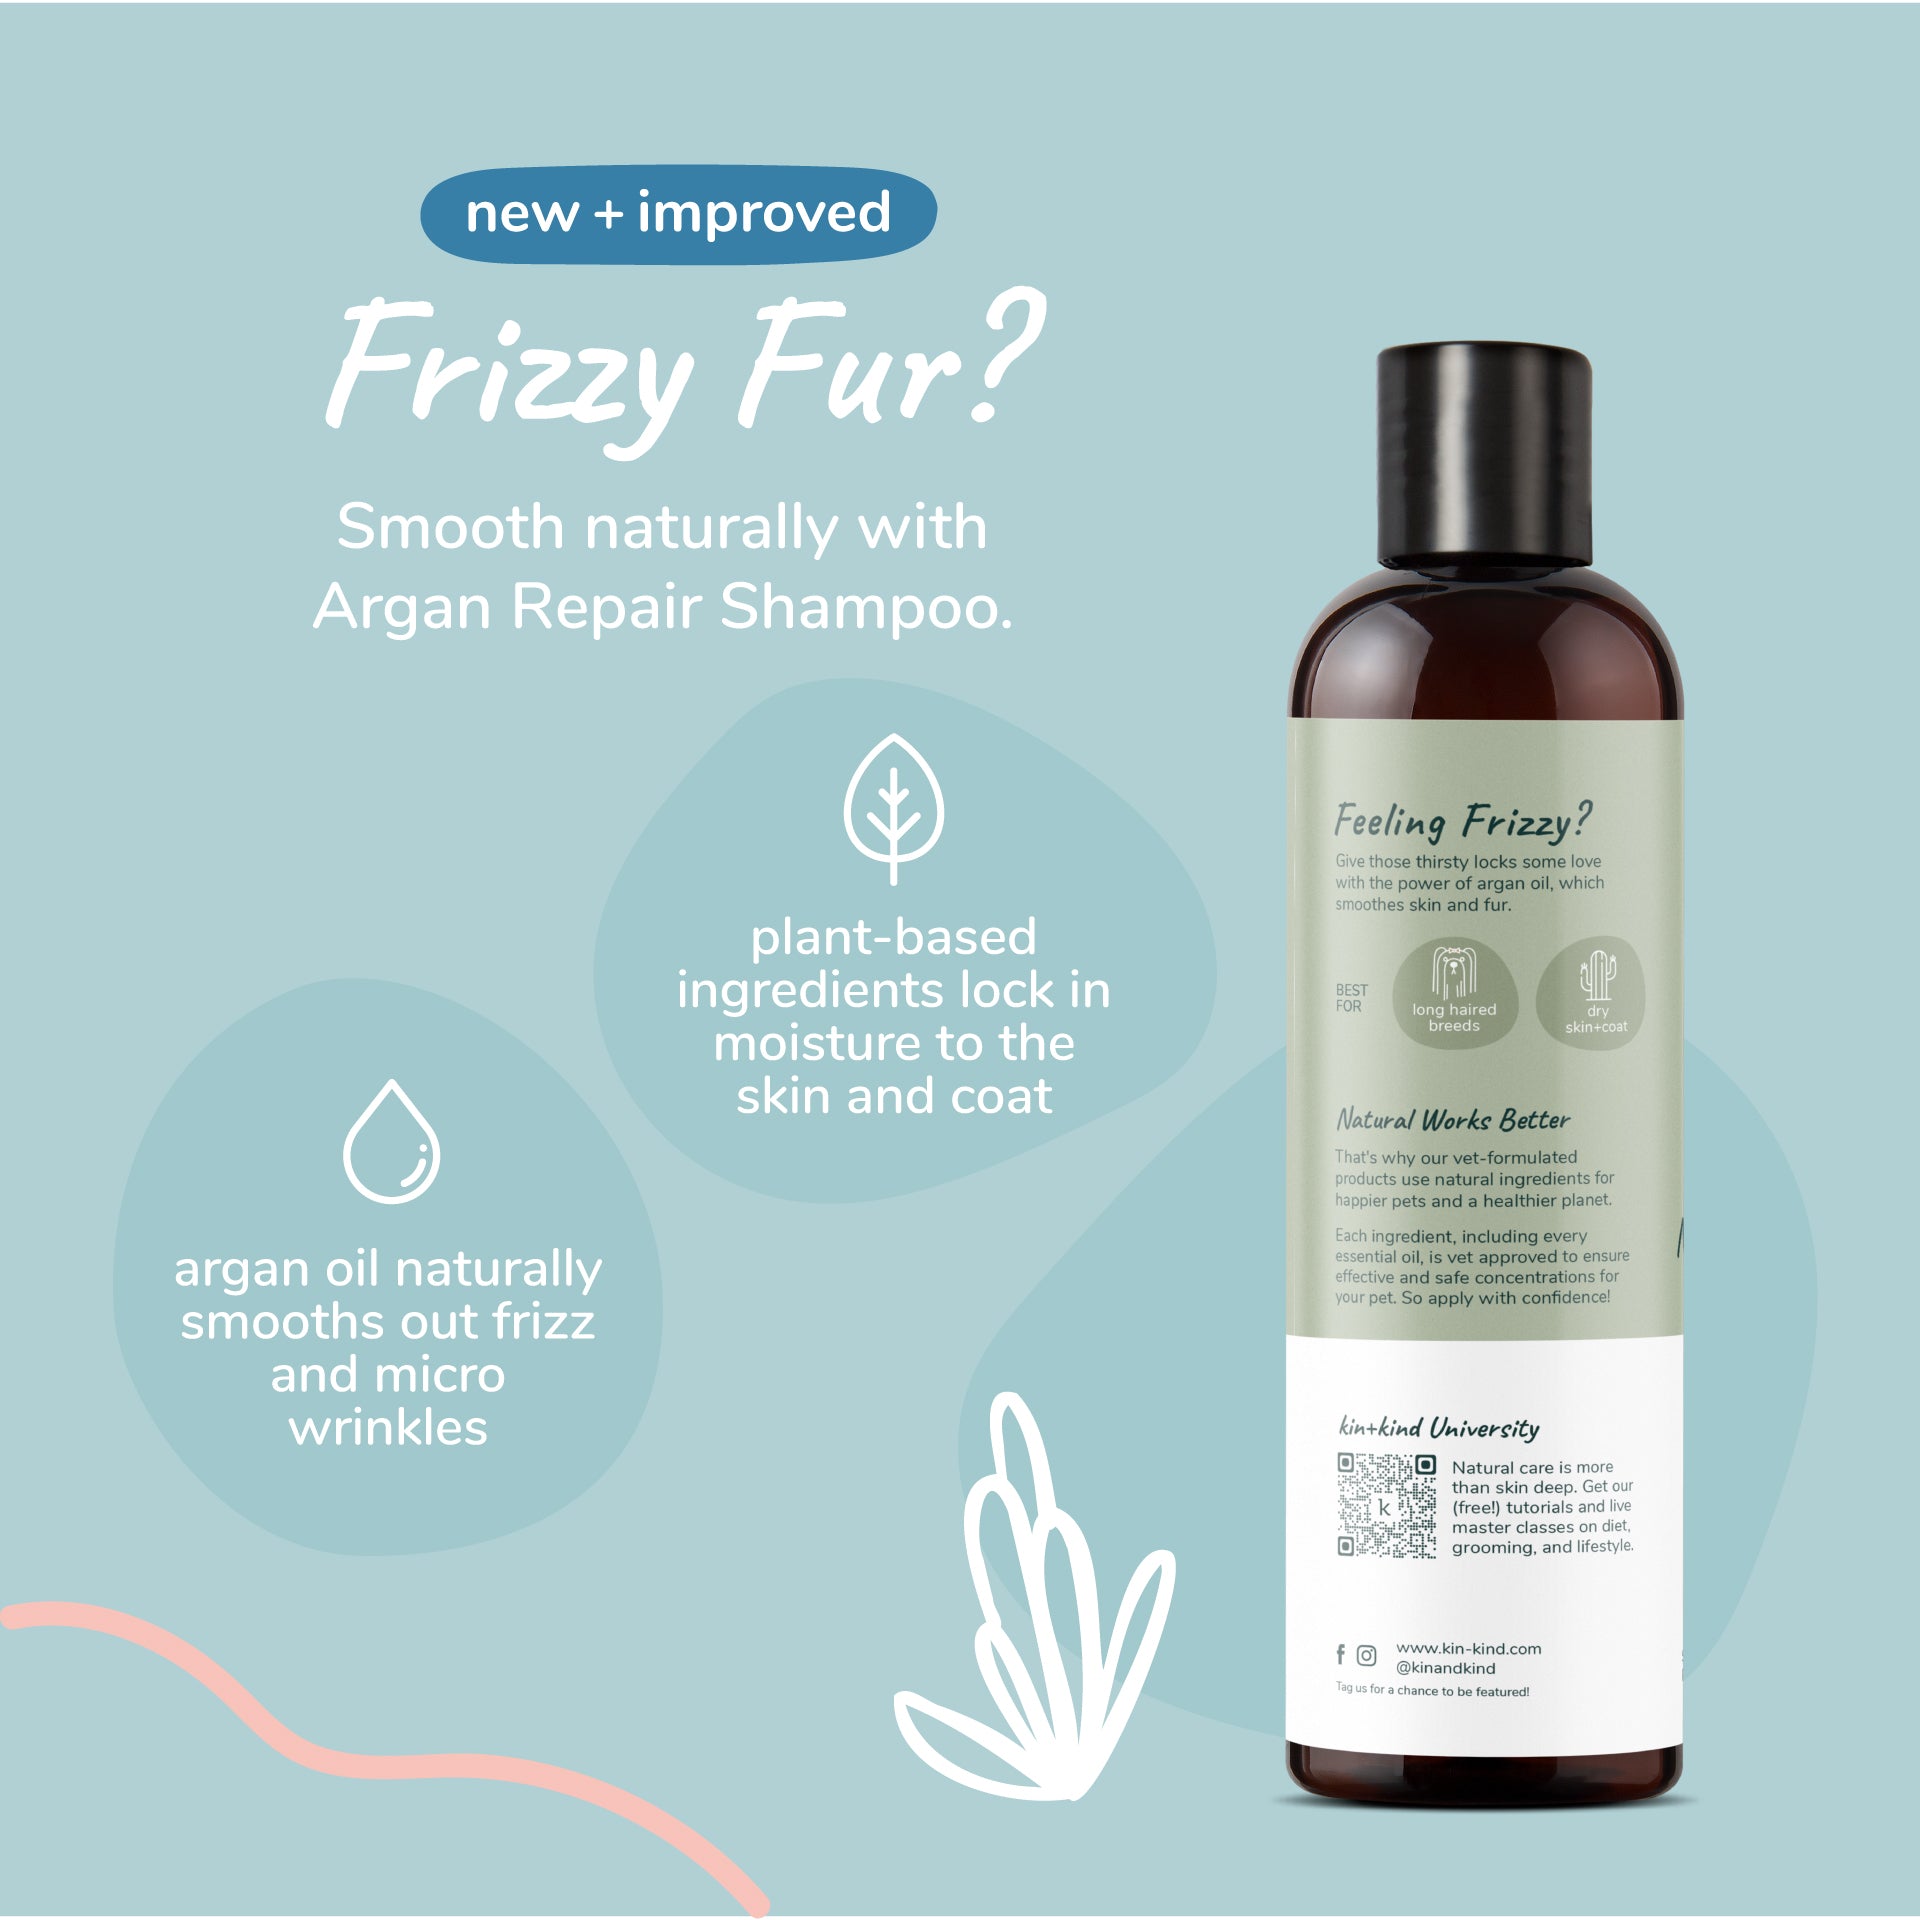 Dry Skin &amp; Coat Shampoo for Dogs (Cedar)